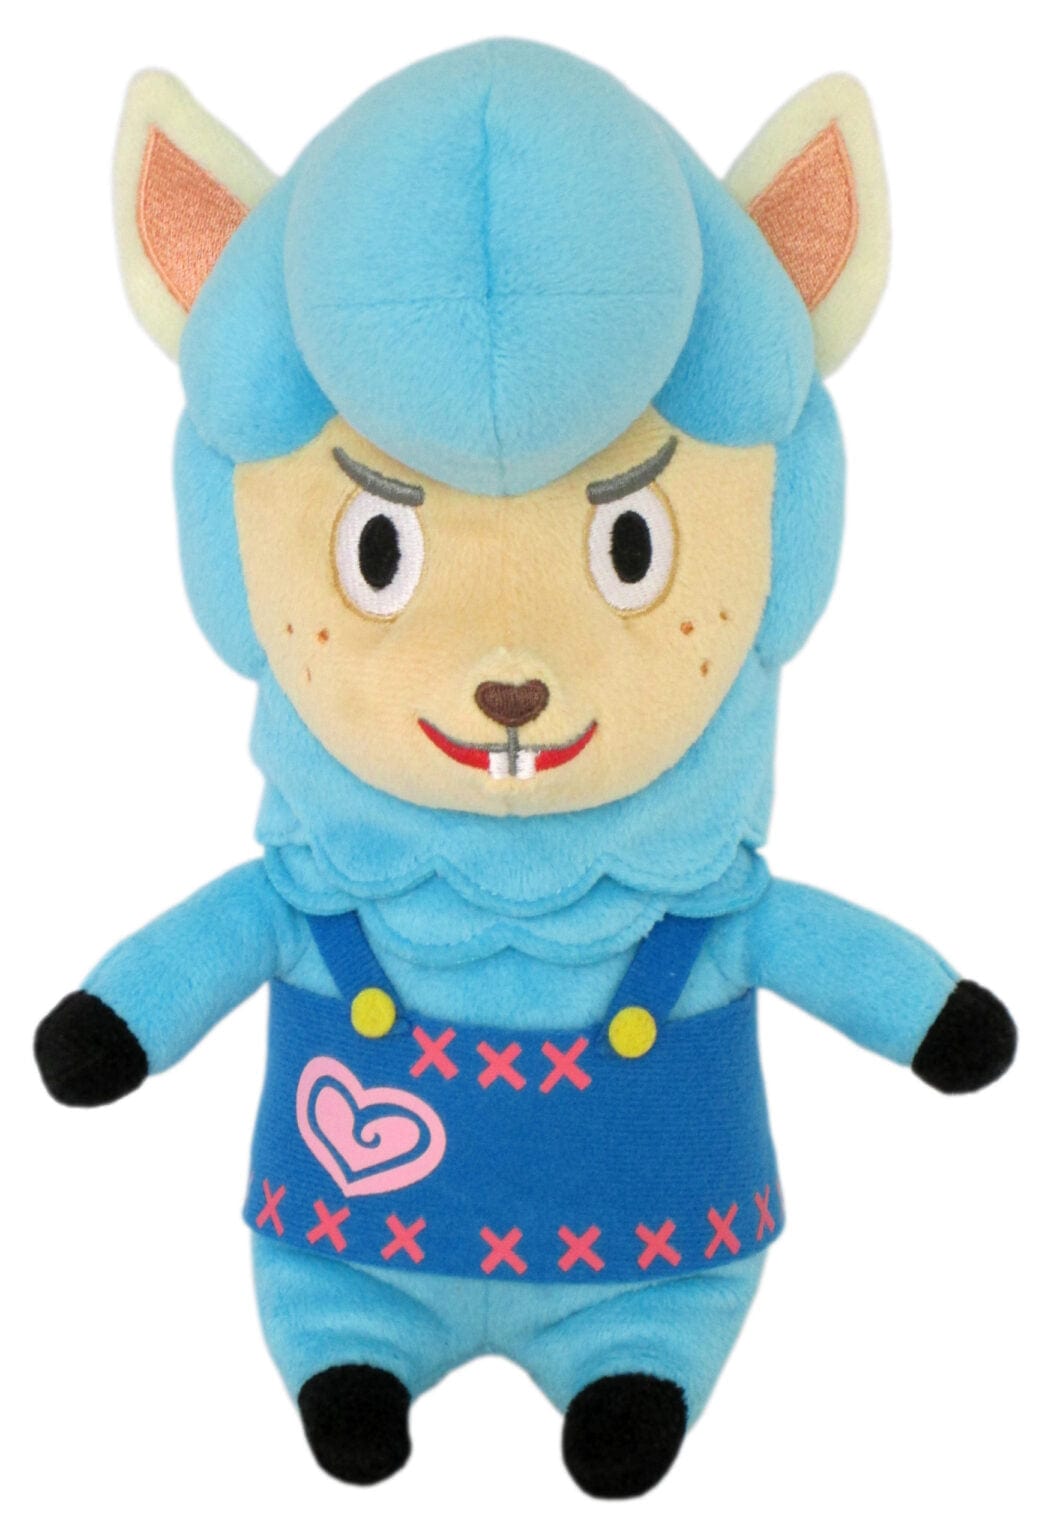 Little Buddy Cyrus 8" Plush Animal Crossing Kawaii Gifts 819996013570